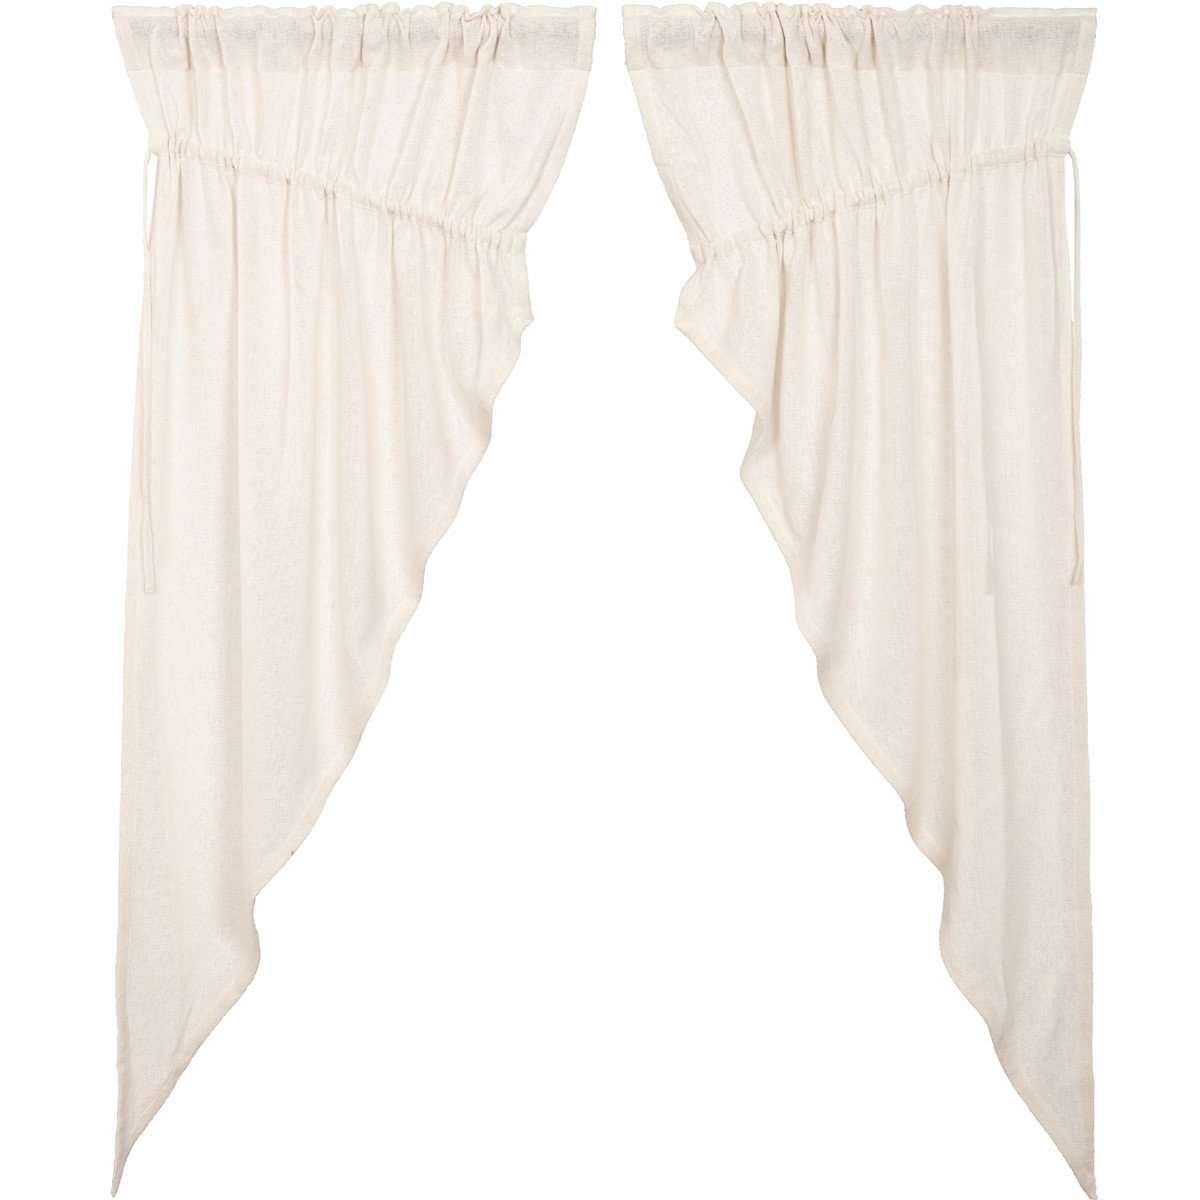 Burlap Antique White Prairie Short Panel Curtain Set of 2 63x36x18 VHC Brands - The Fox Decor